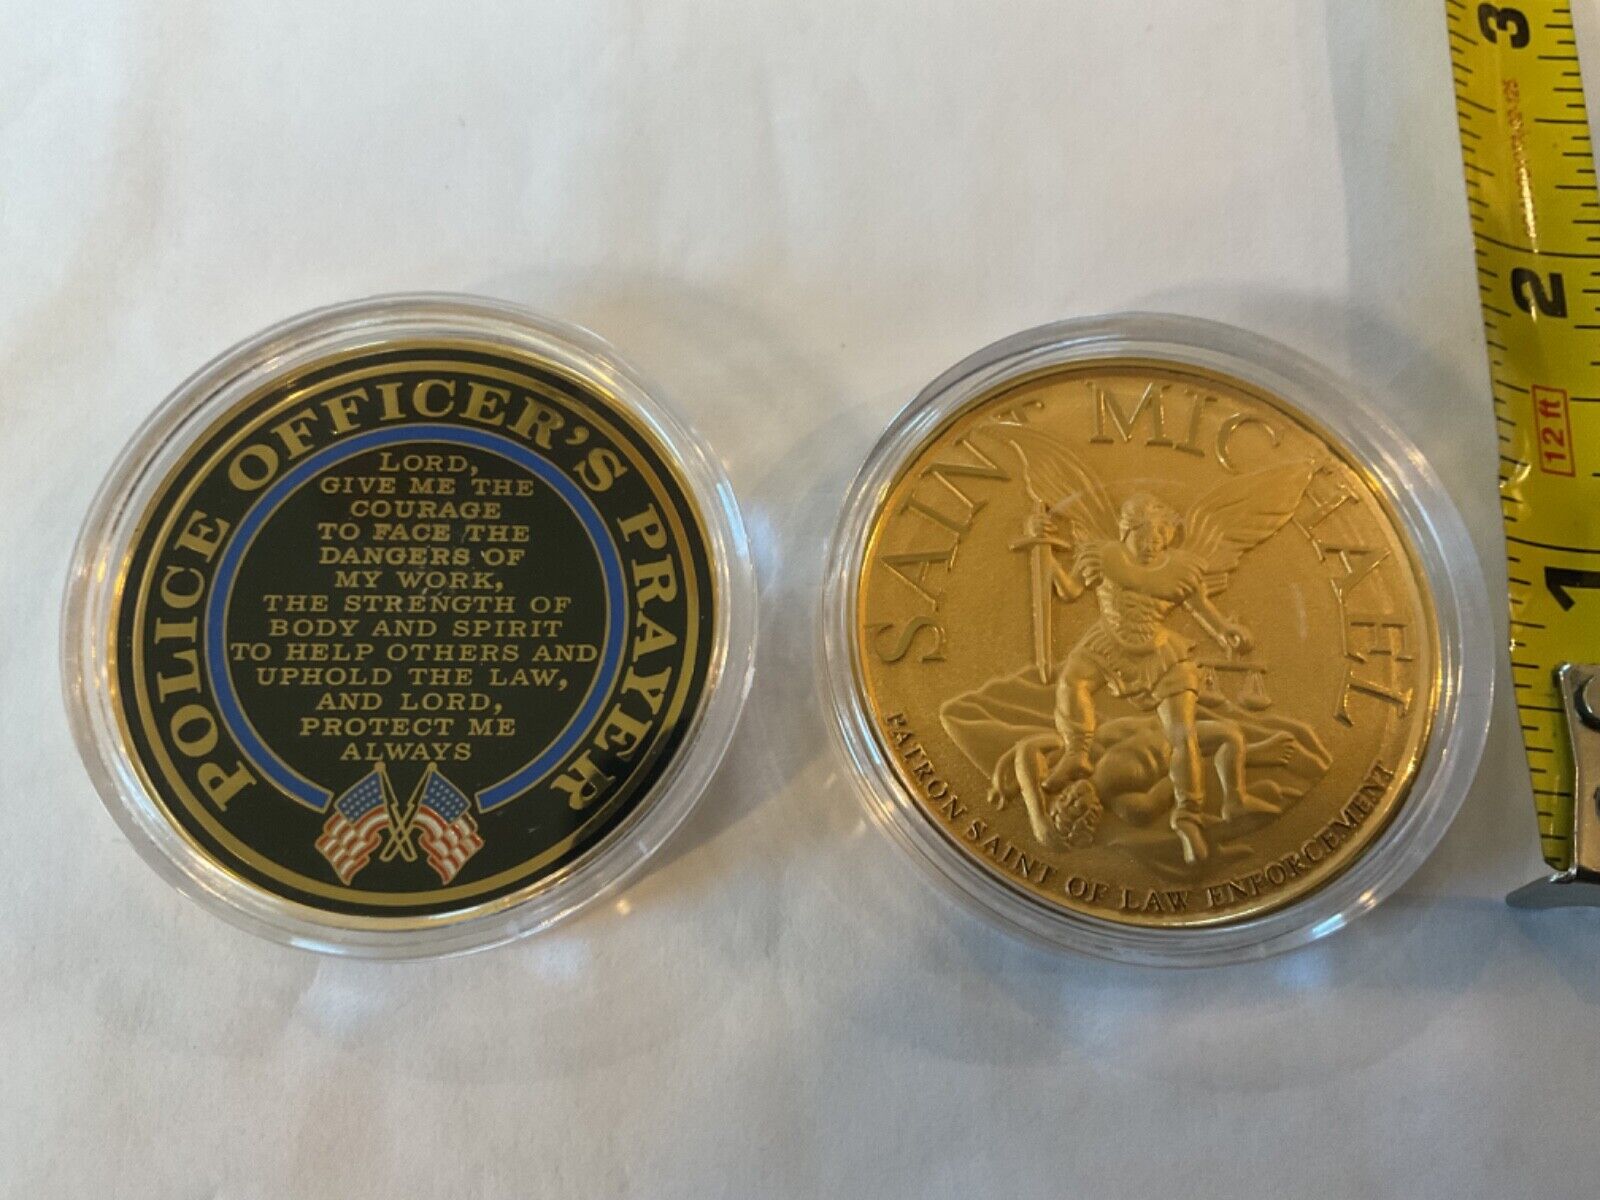 Saint Michael Police Prayer Challenge Coin bulk 10 pieces wholesale price new